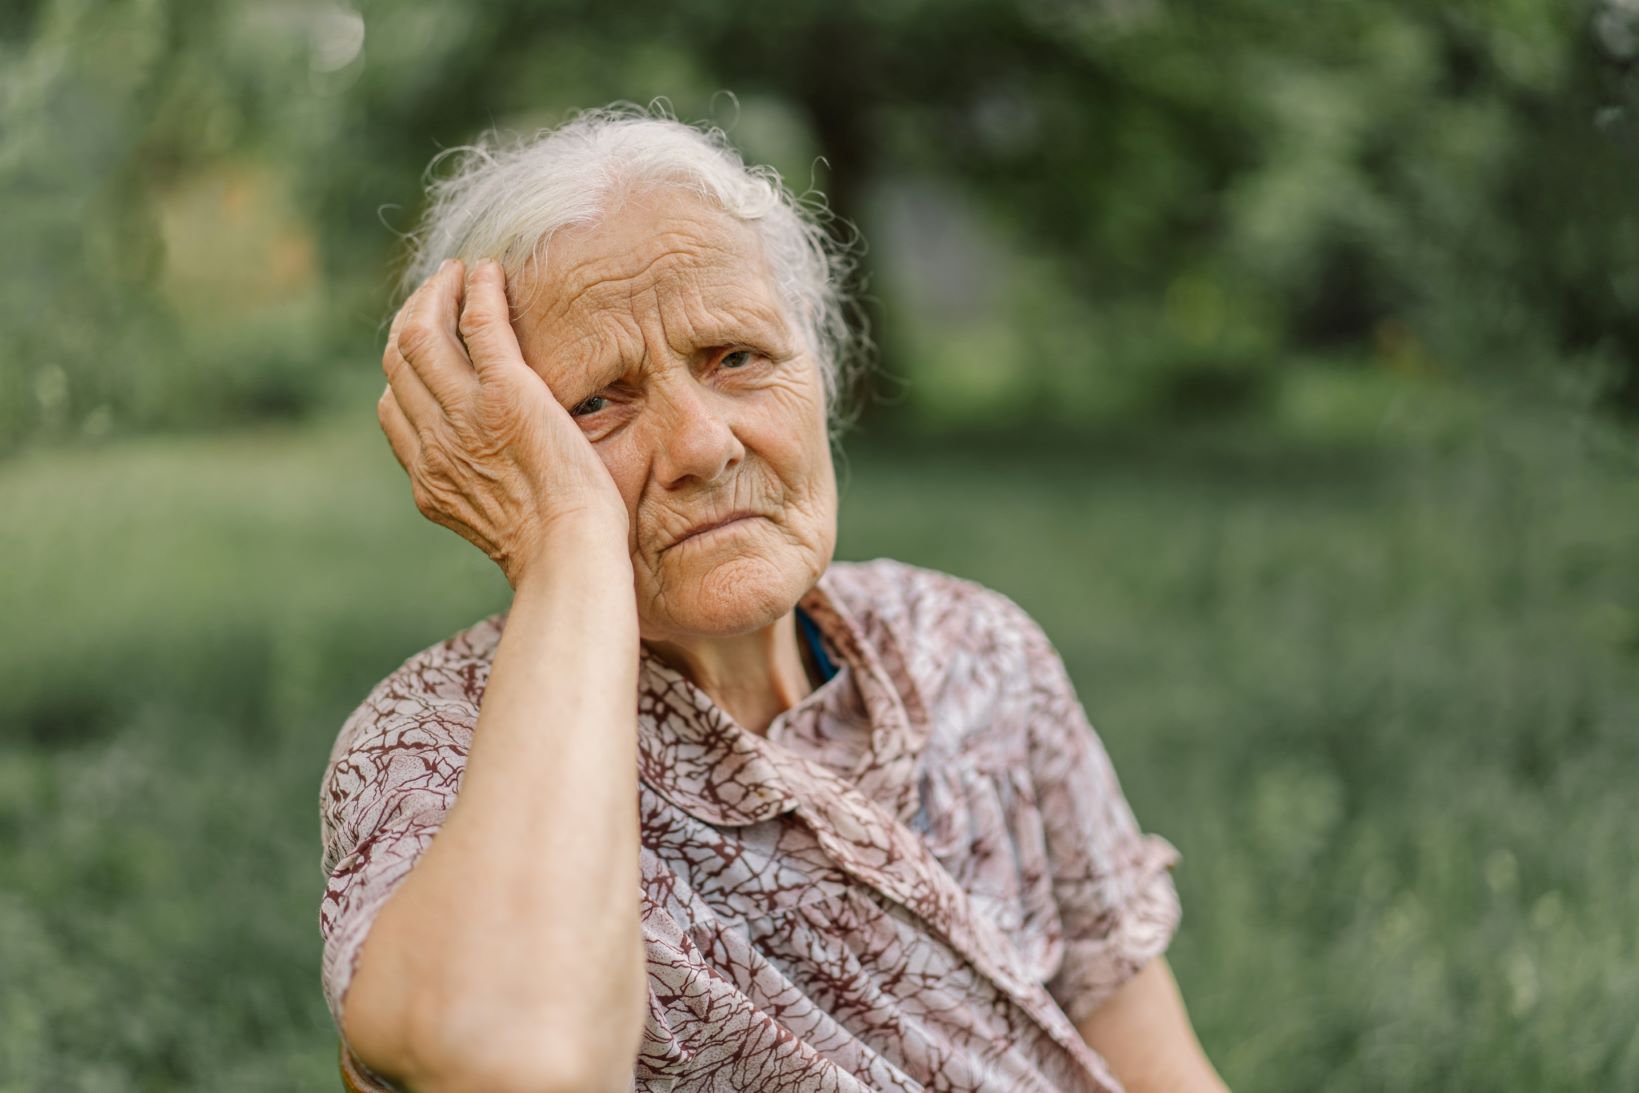 Older lady showing fatigue from sleep apnea.